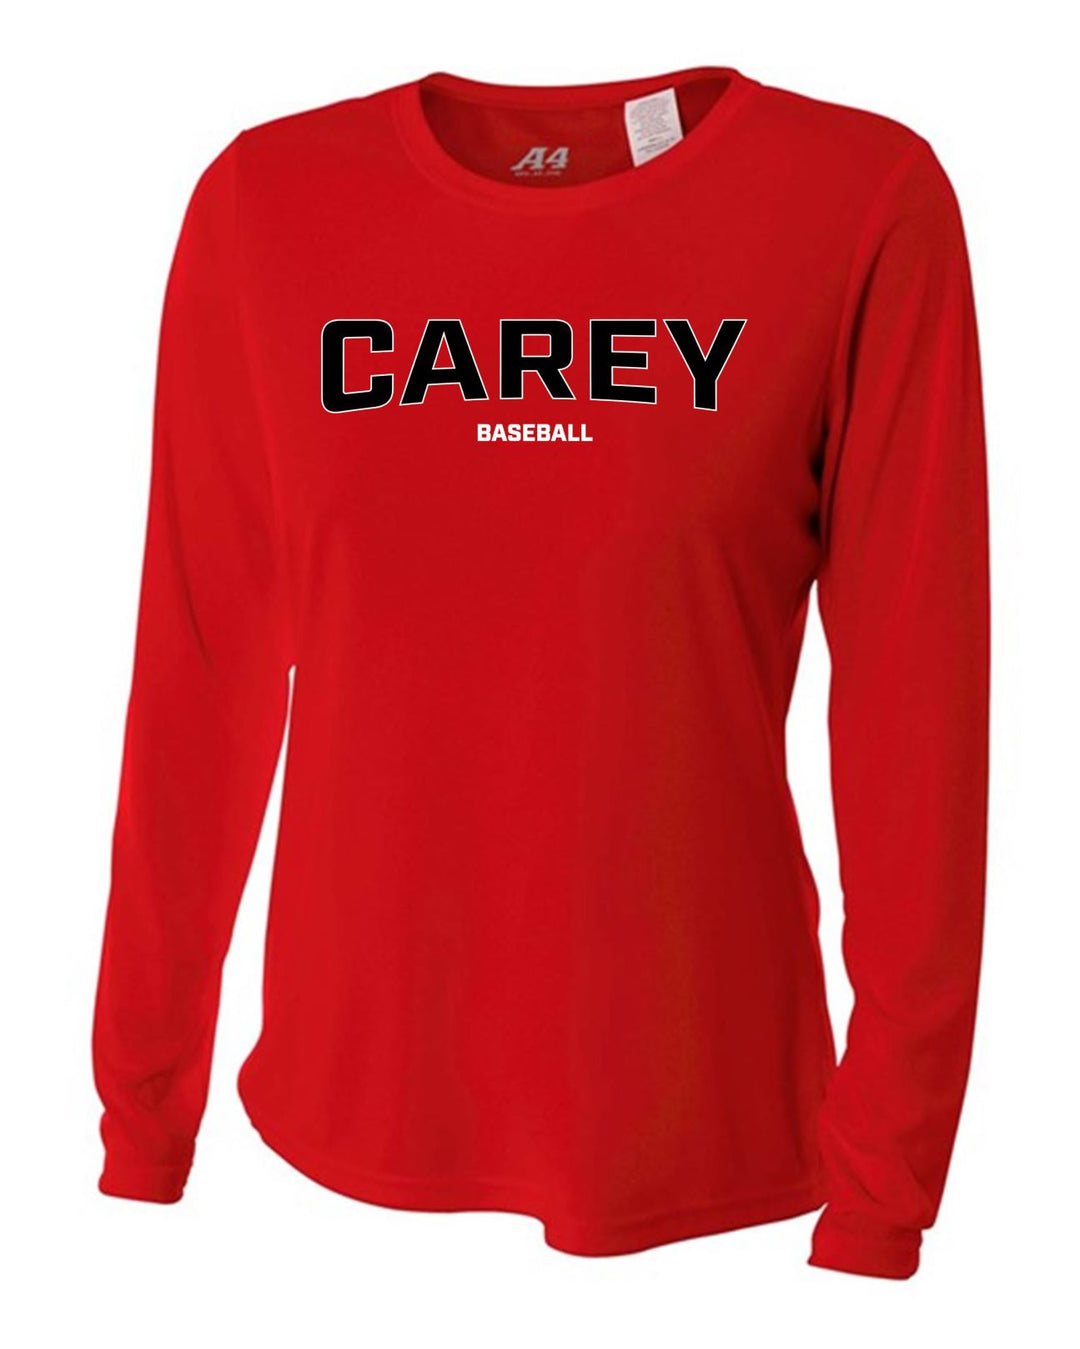 WCU Baseball Women's Long-Sleeve Performance Shirt WCU Baseball Red CAREY - Third Coast Soccer